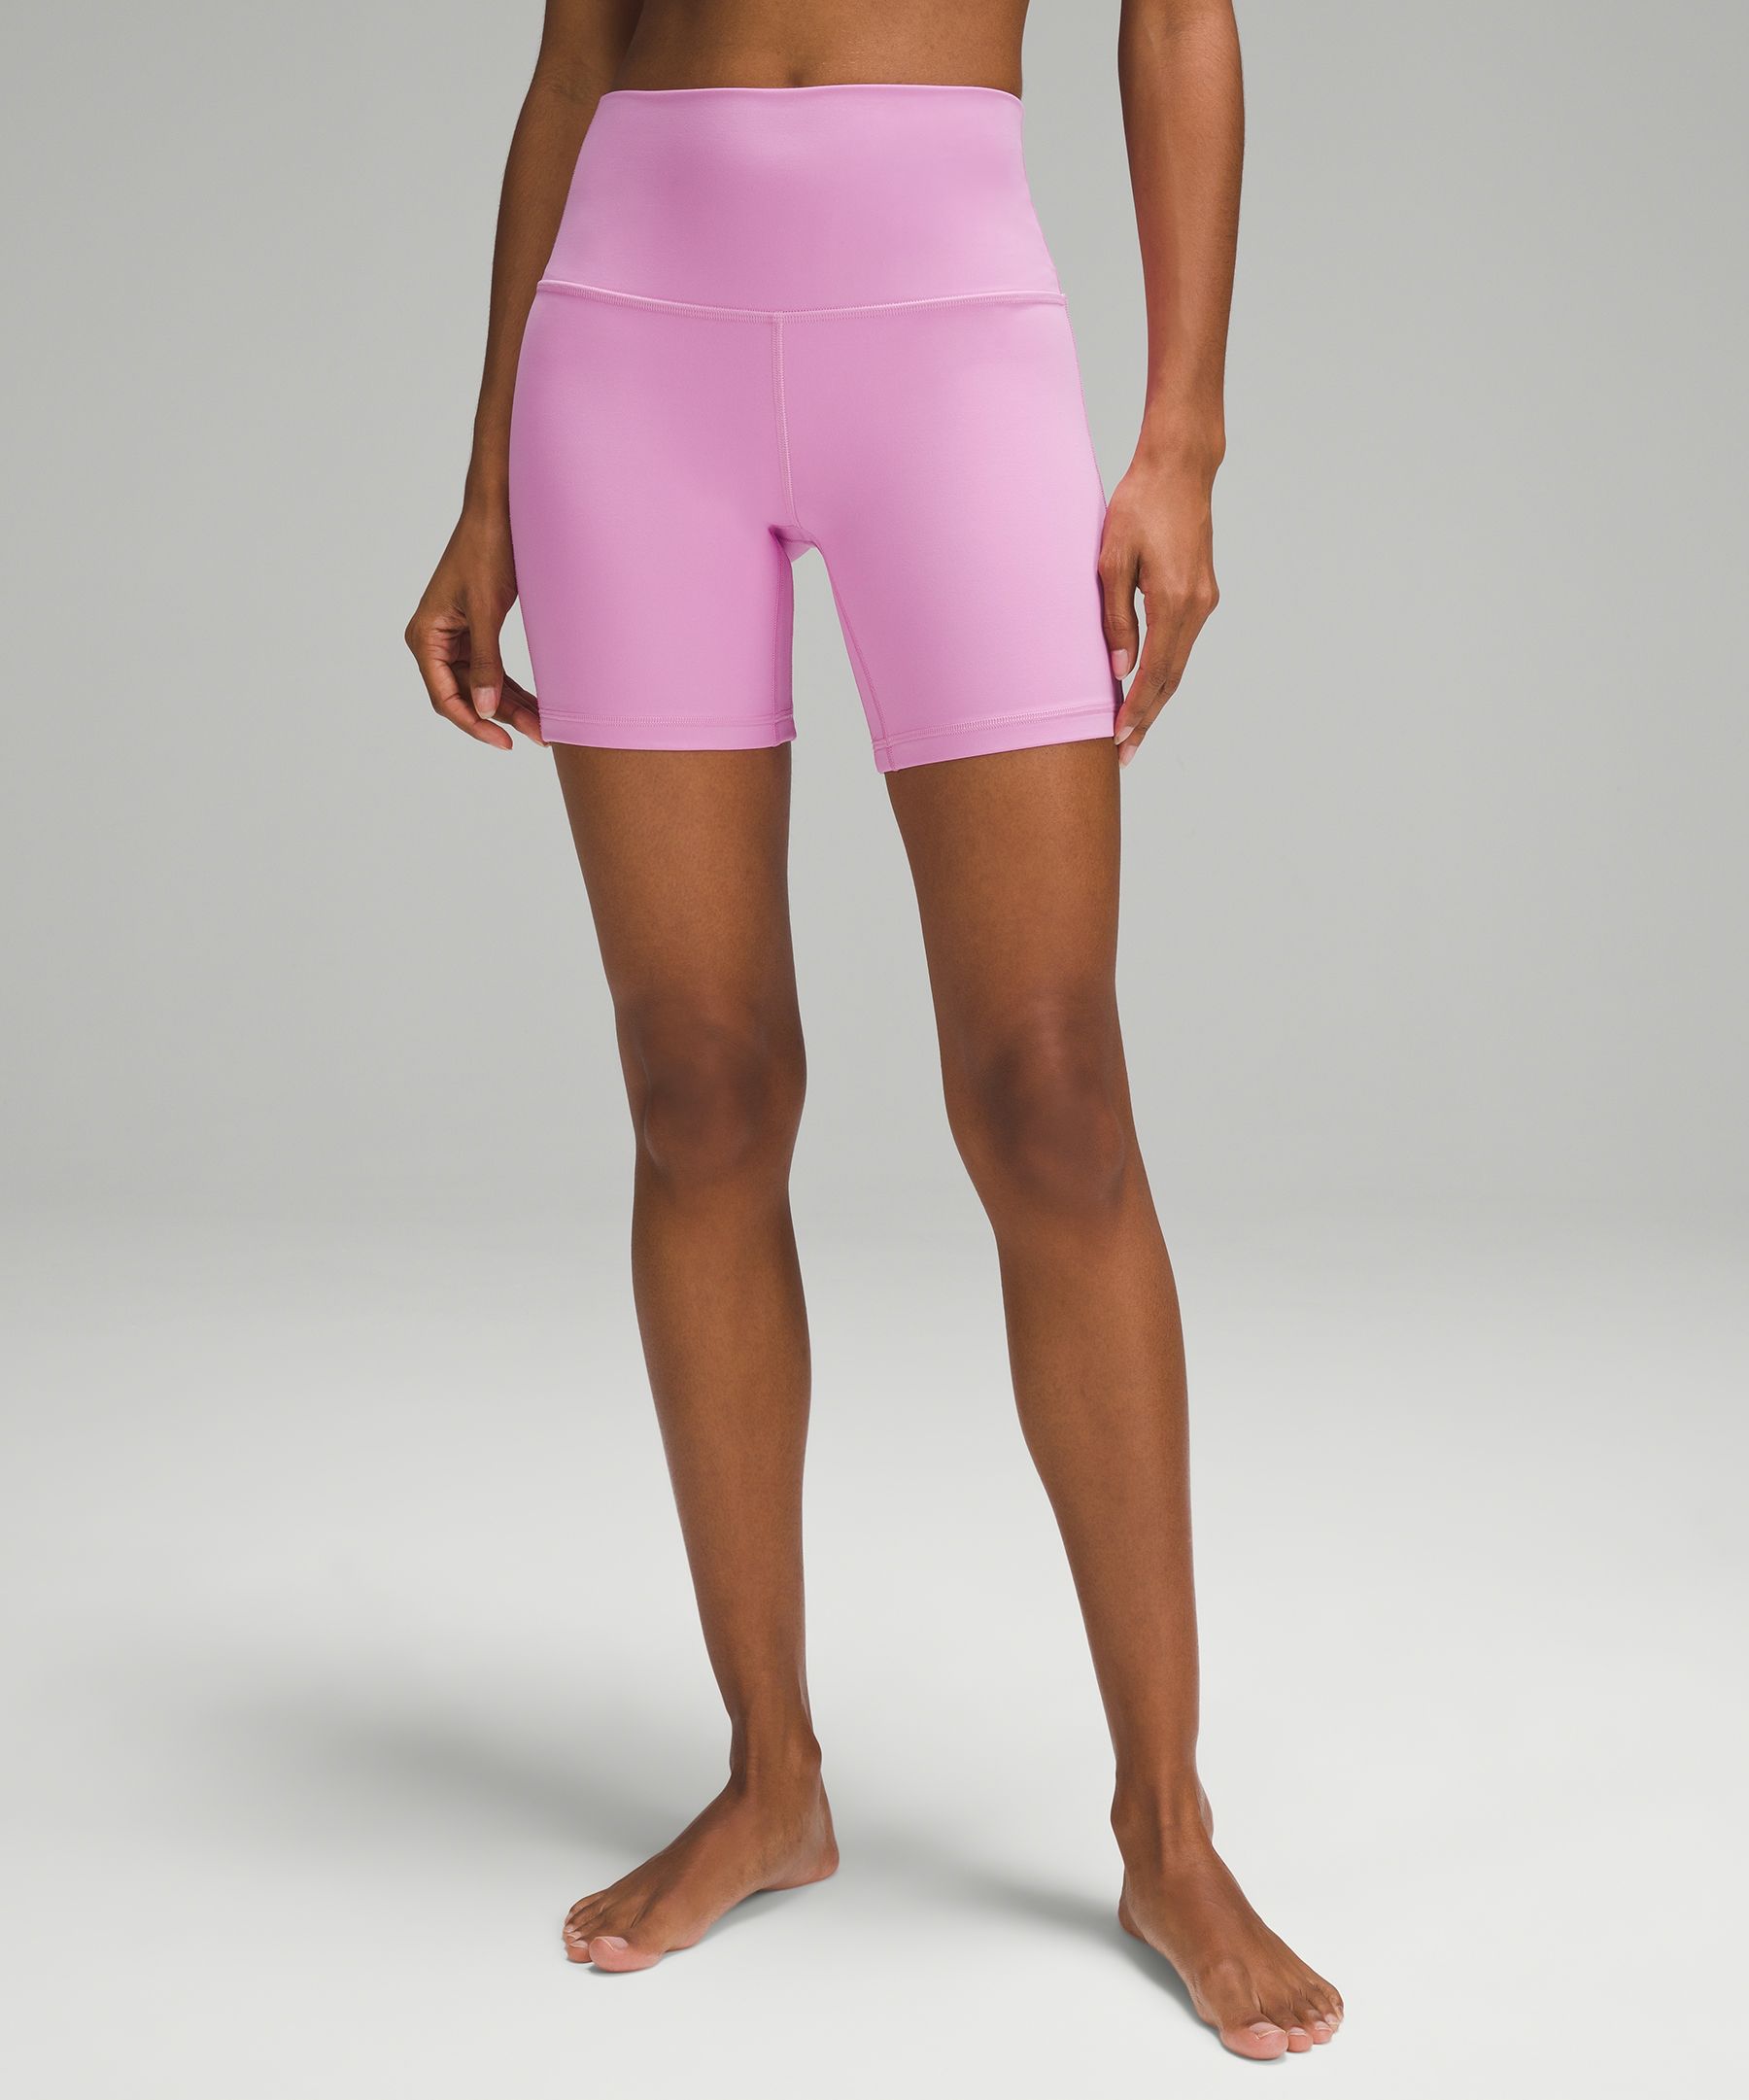 lululemon, Align High-rise Shorts, 6", Pink, US2,US4,US6,US8,US10,US12,US14,20